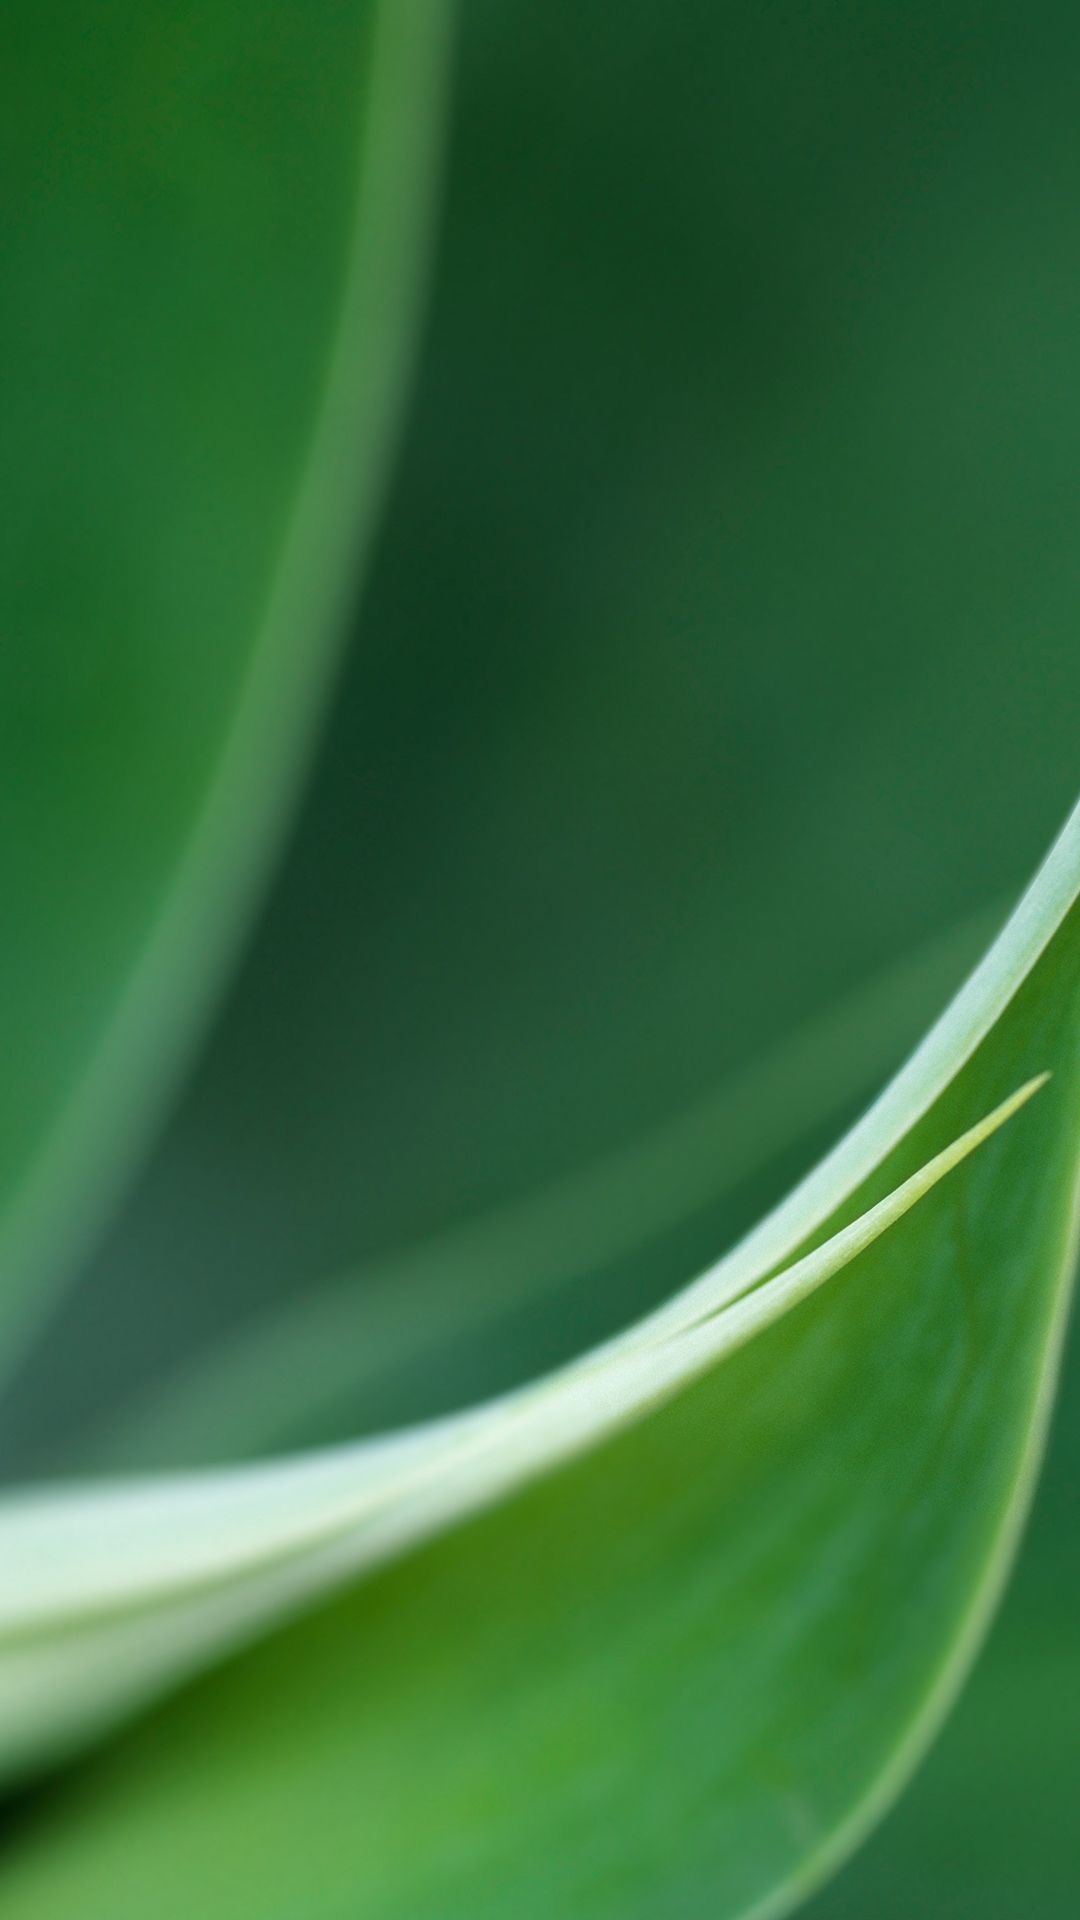 Sony Xperia XZ Wallpaper with Green Leave Picture. Por do sol